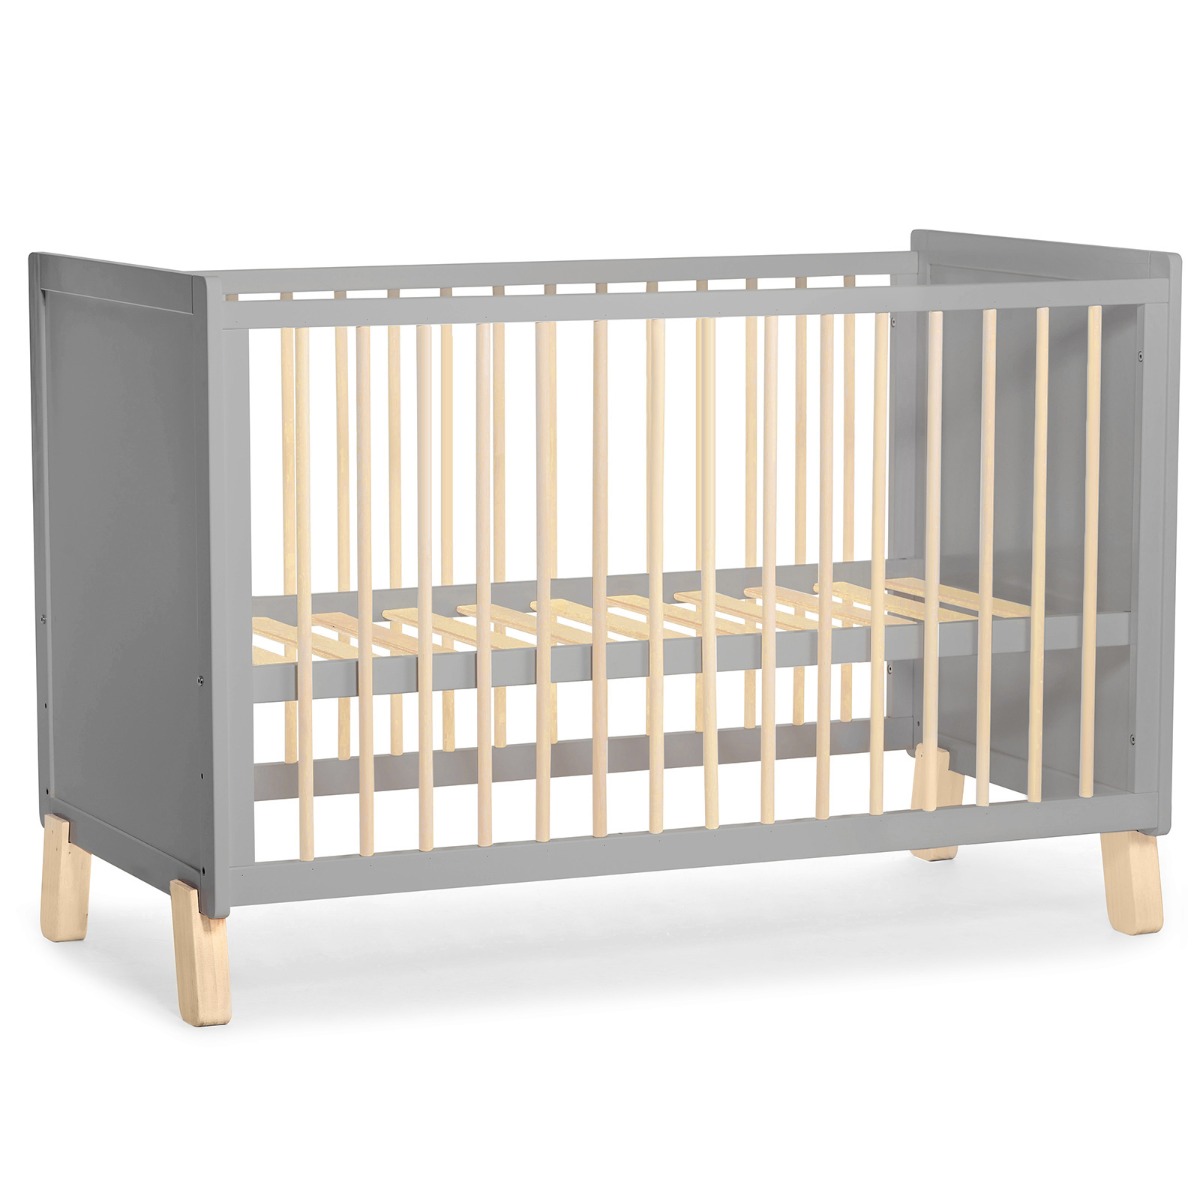 Baby wooden cot NICO grey